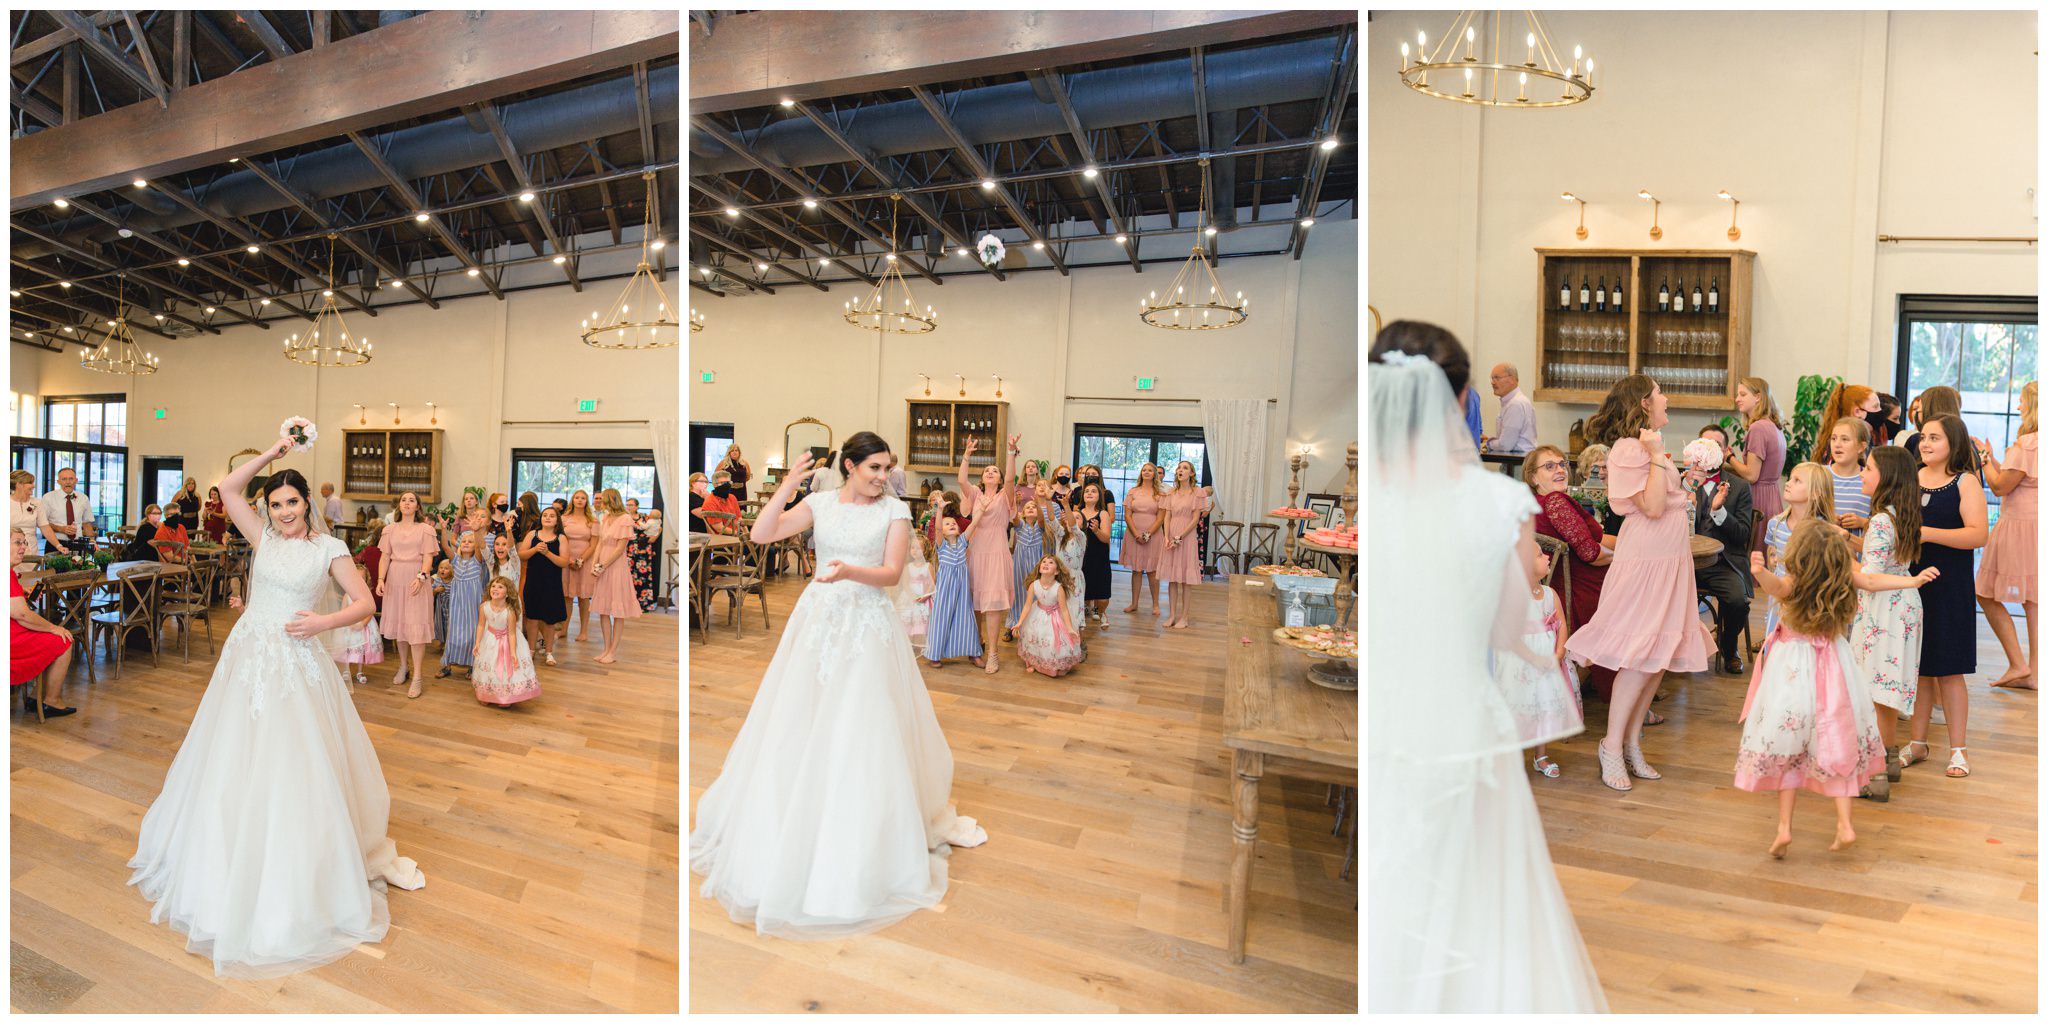 Bride tossing wedding bouquet in the Wild Oak Wedding Venue in Lindon, Utah.